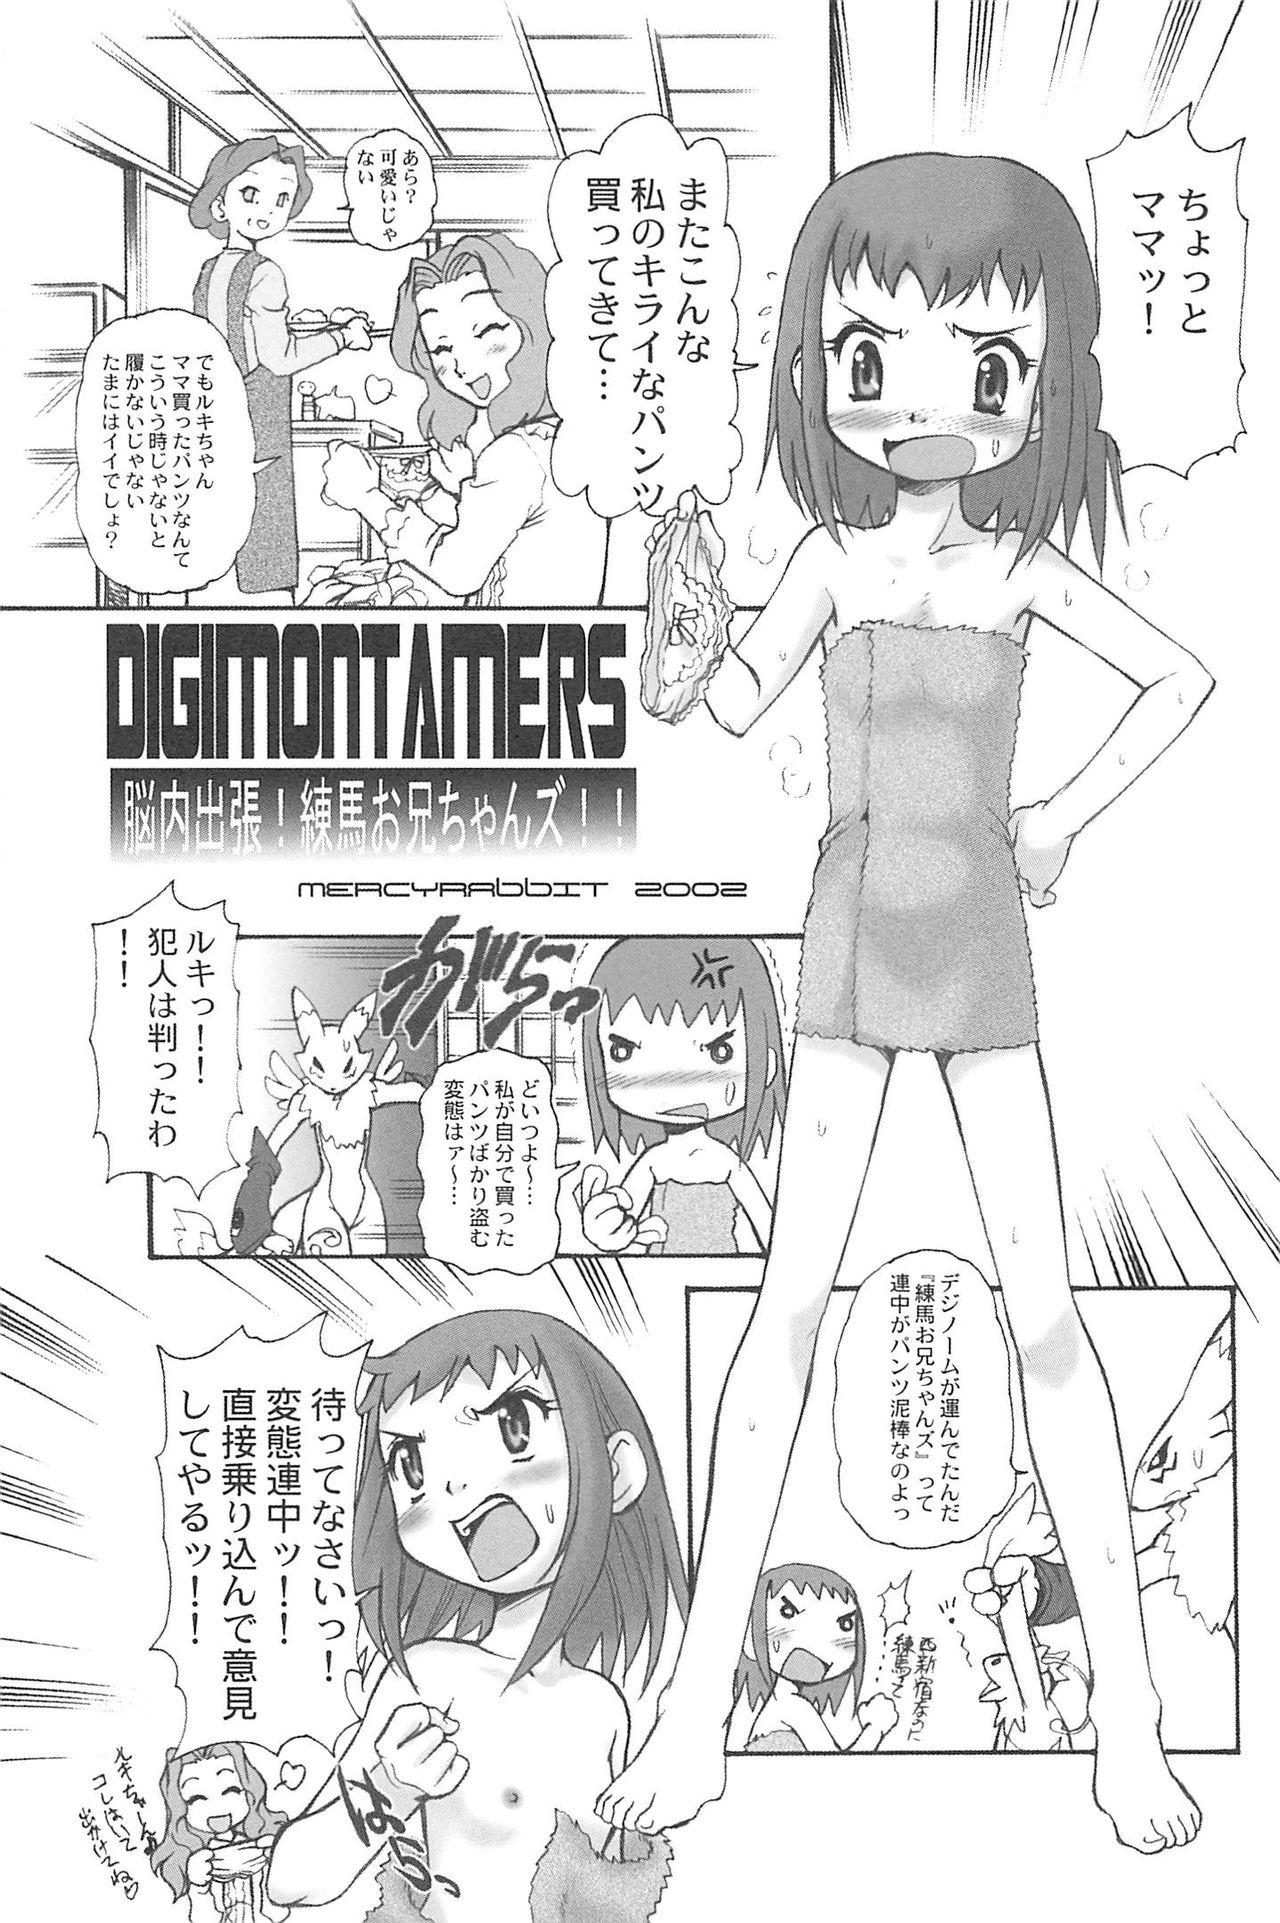 Ariake International X-rated Manga Festival Mercy Rabbit SPECIAL 24